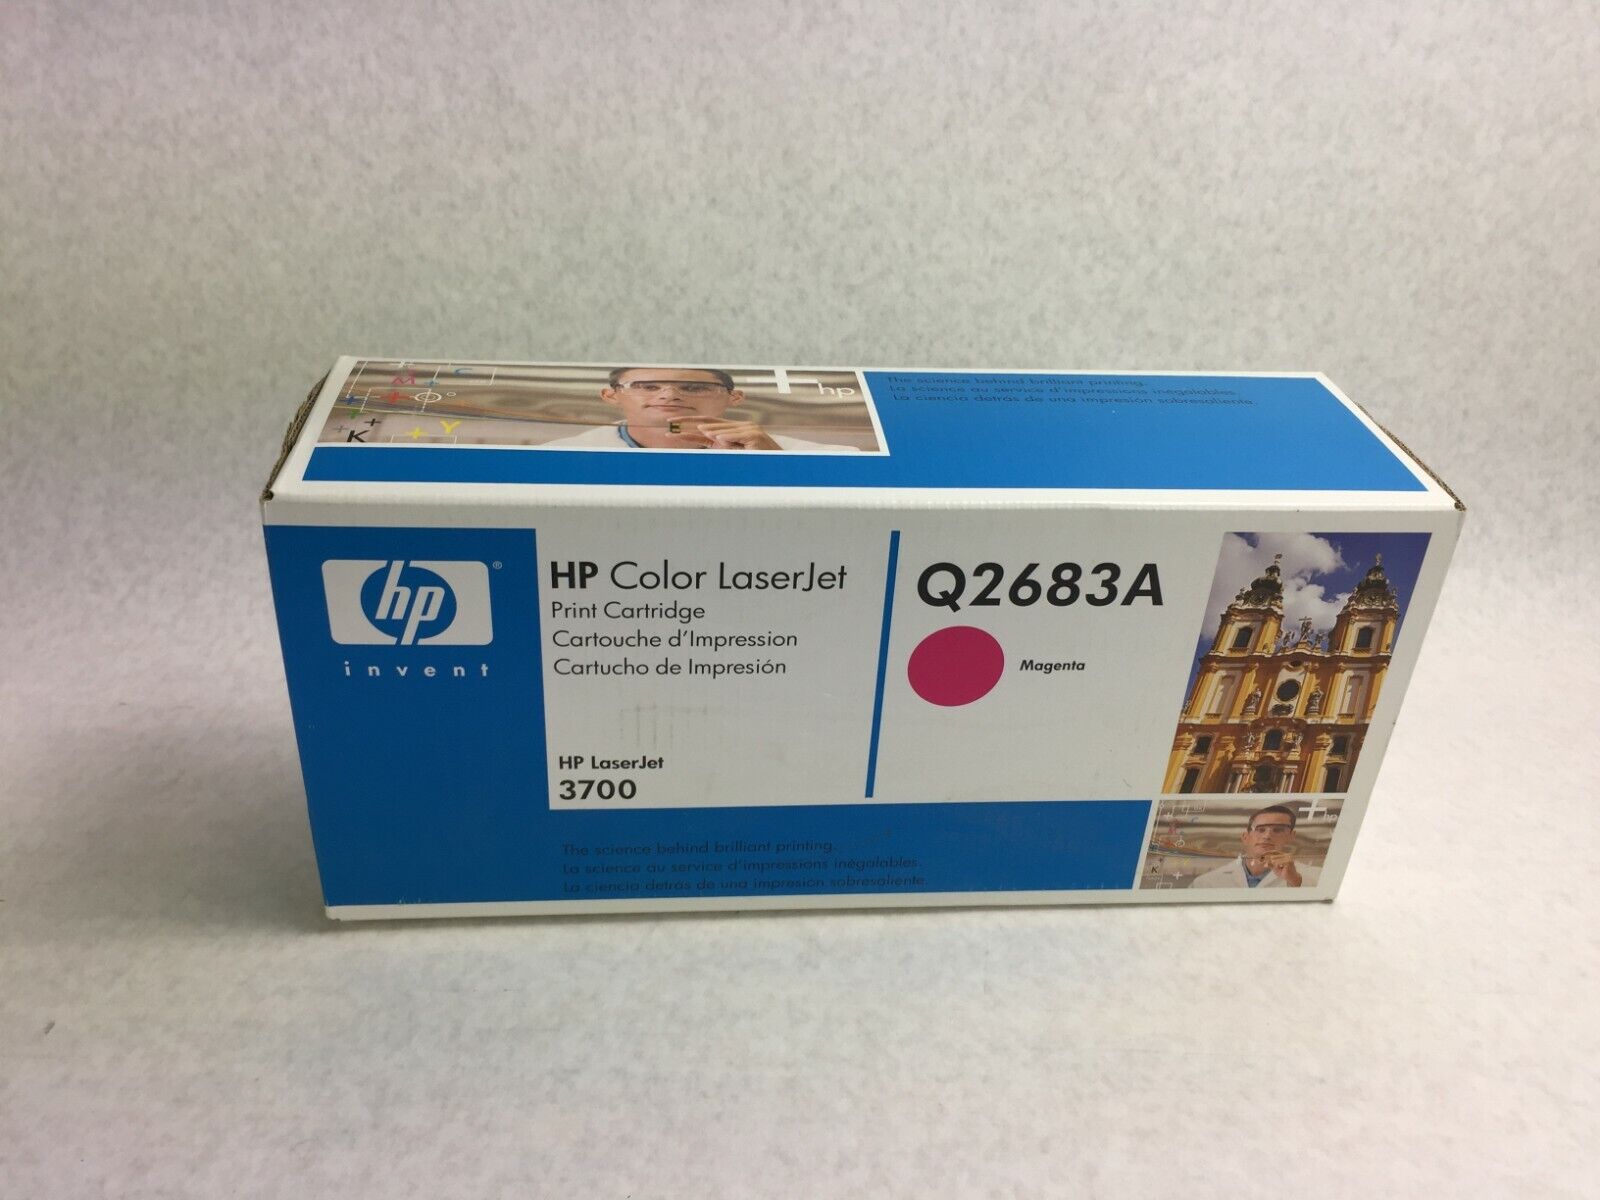 Genuine HP Laserjet Q2683A Magenta Toner Cartridge  Factory Sealed Box